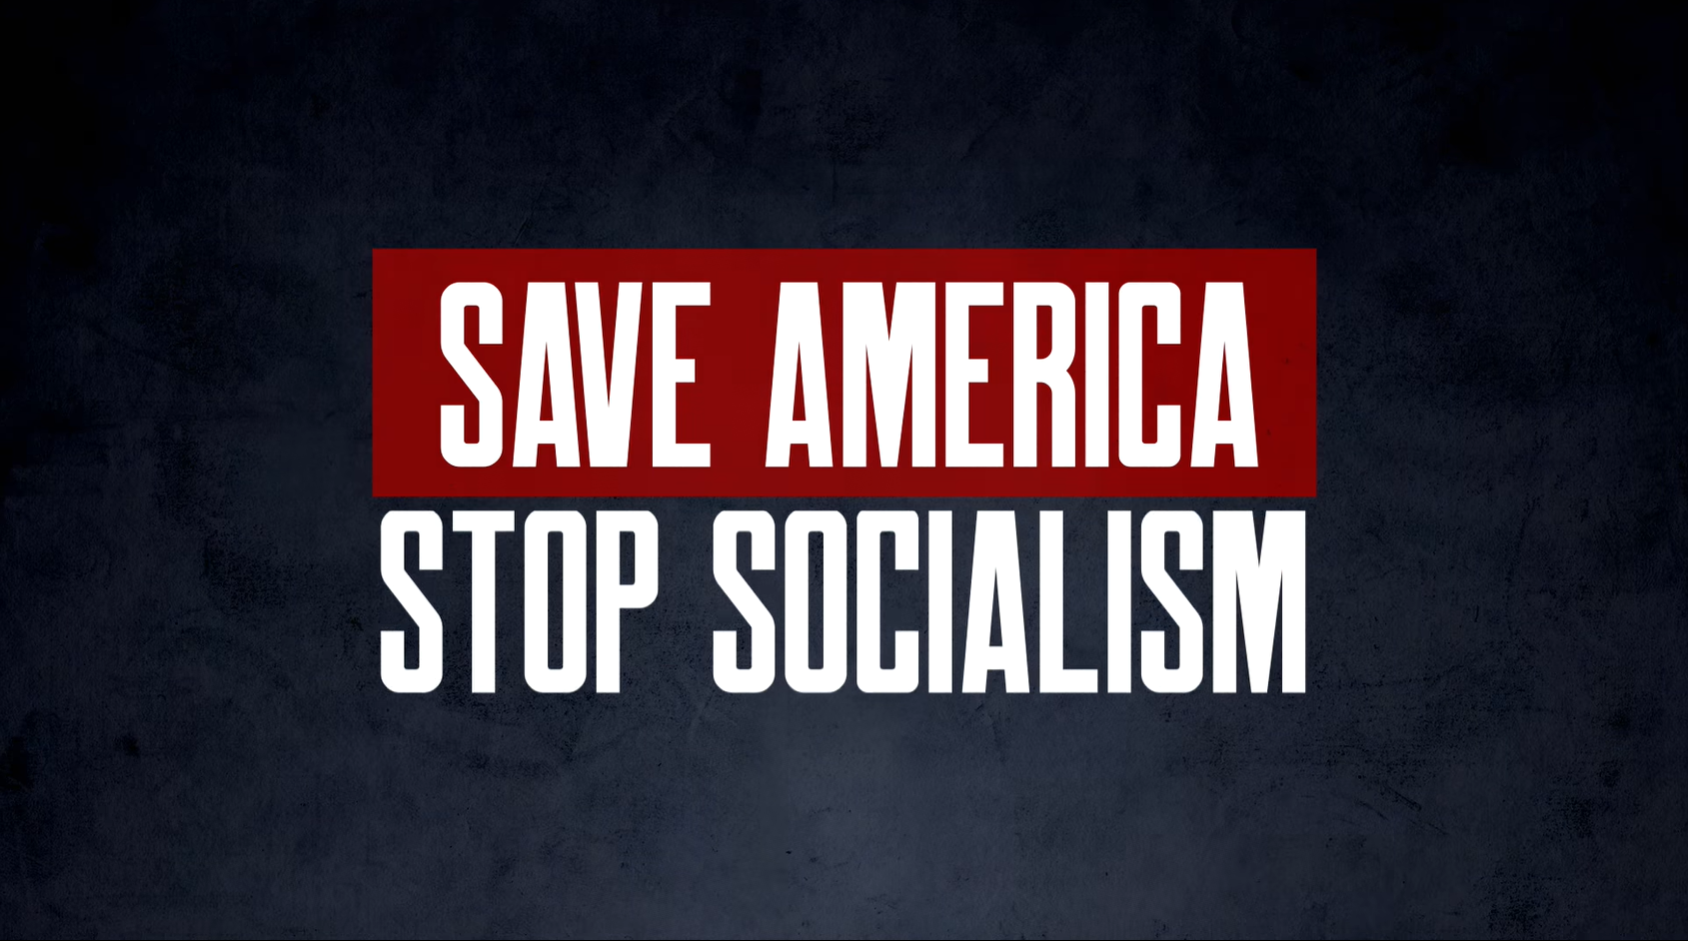 WATCH: “Save America, Stop Socialism”